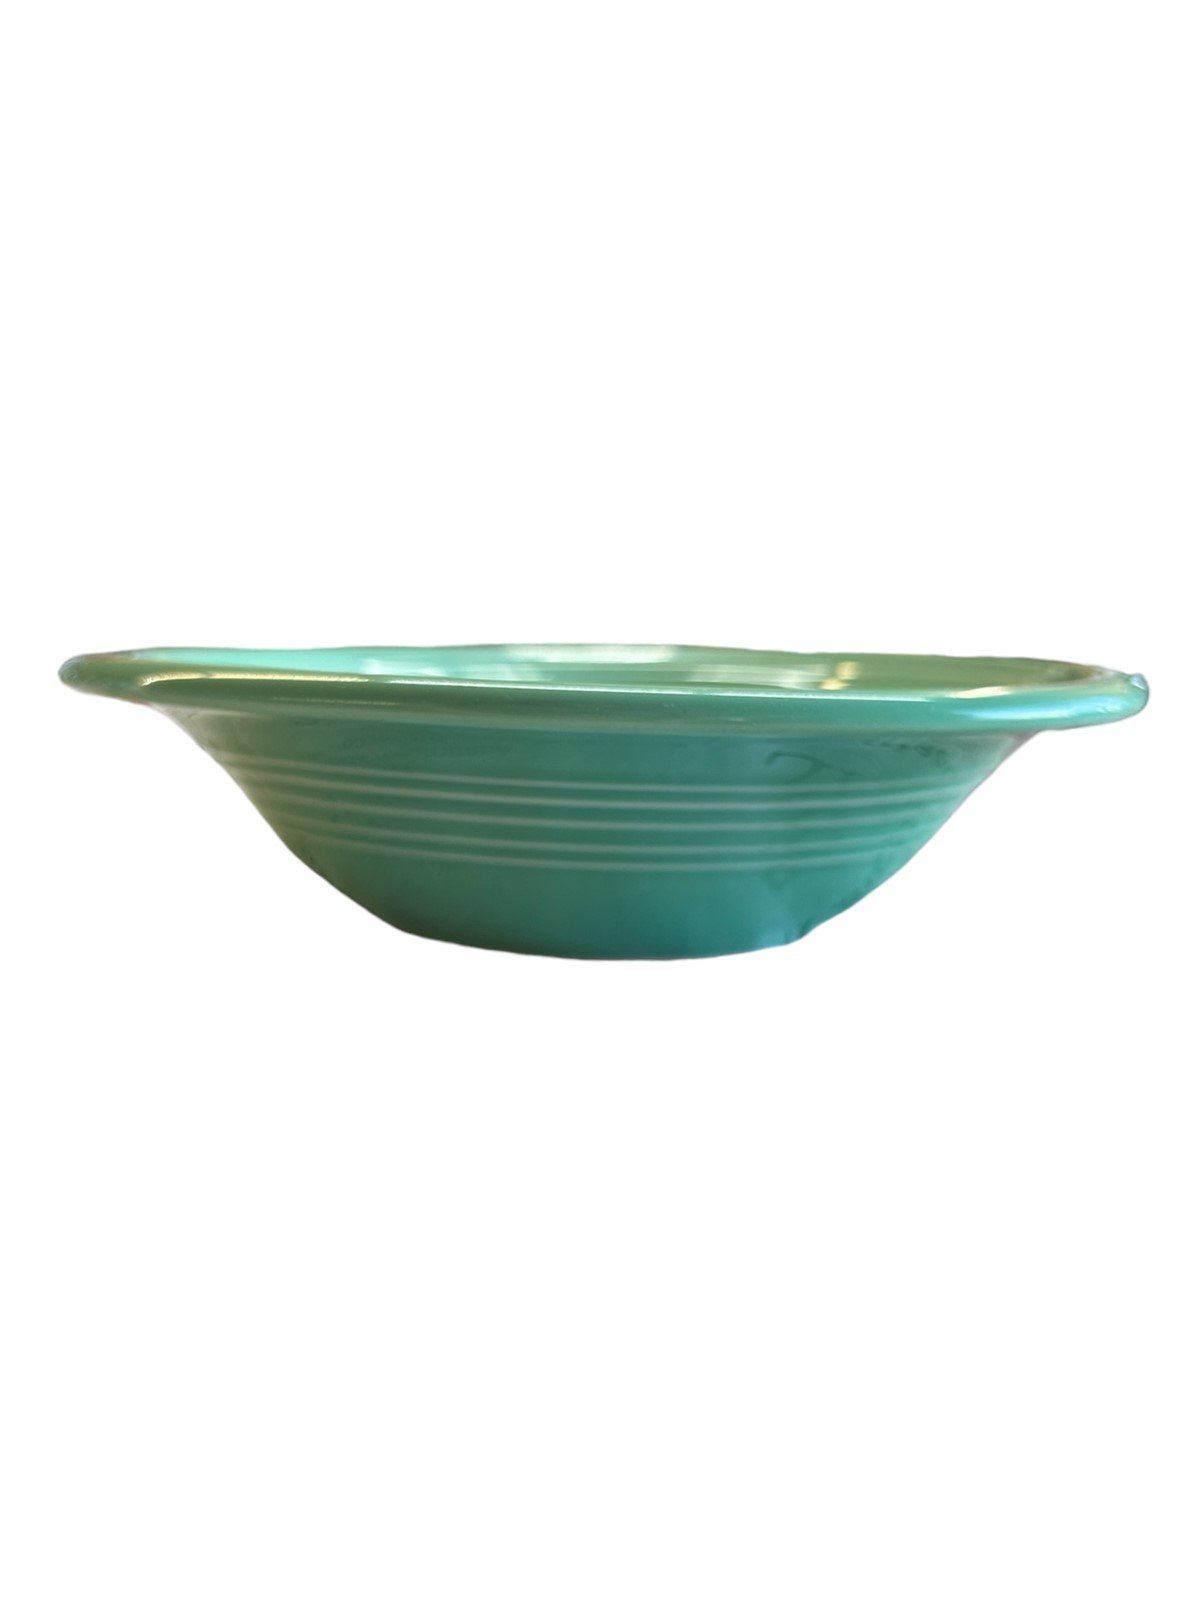 Fiesta - Sea Mist Green Stacking Cereal Bowl Homer Laughlin Ceramic Kitchenware